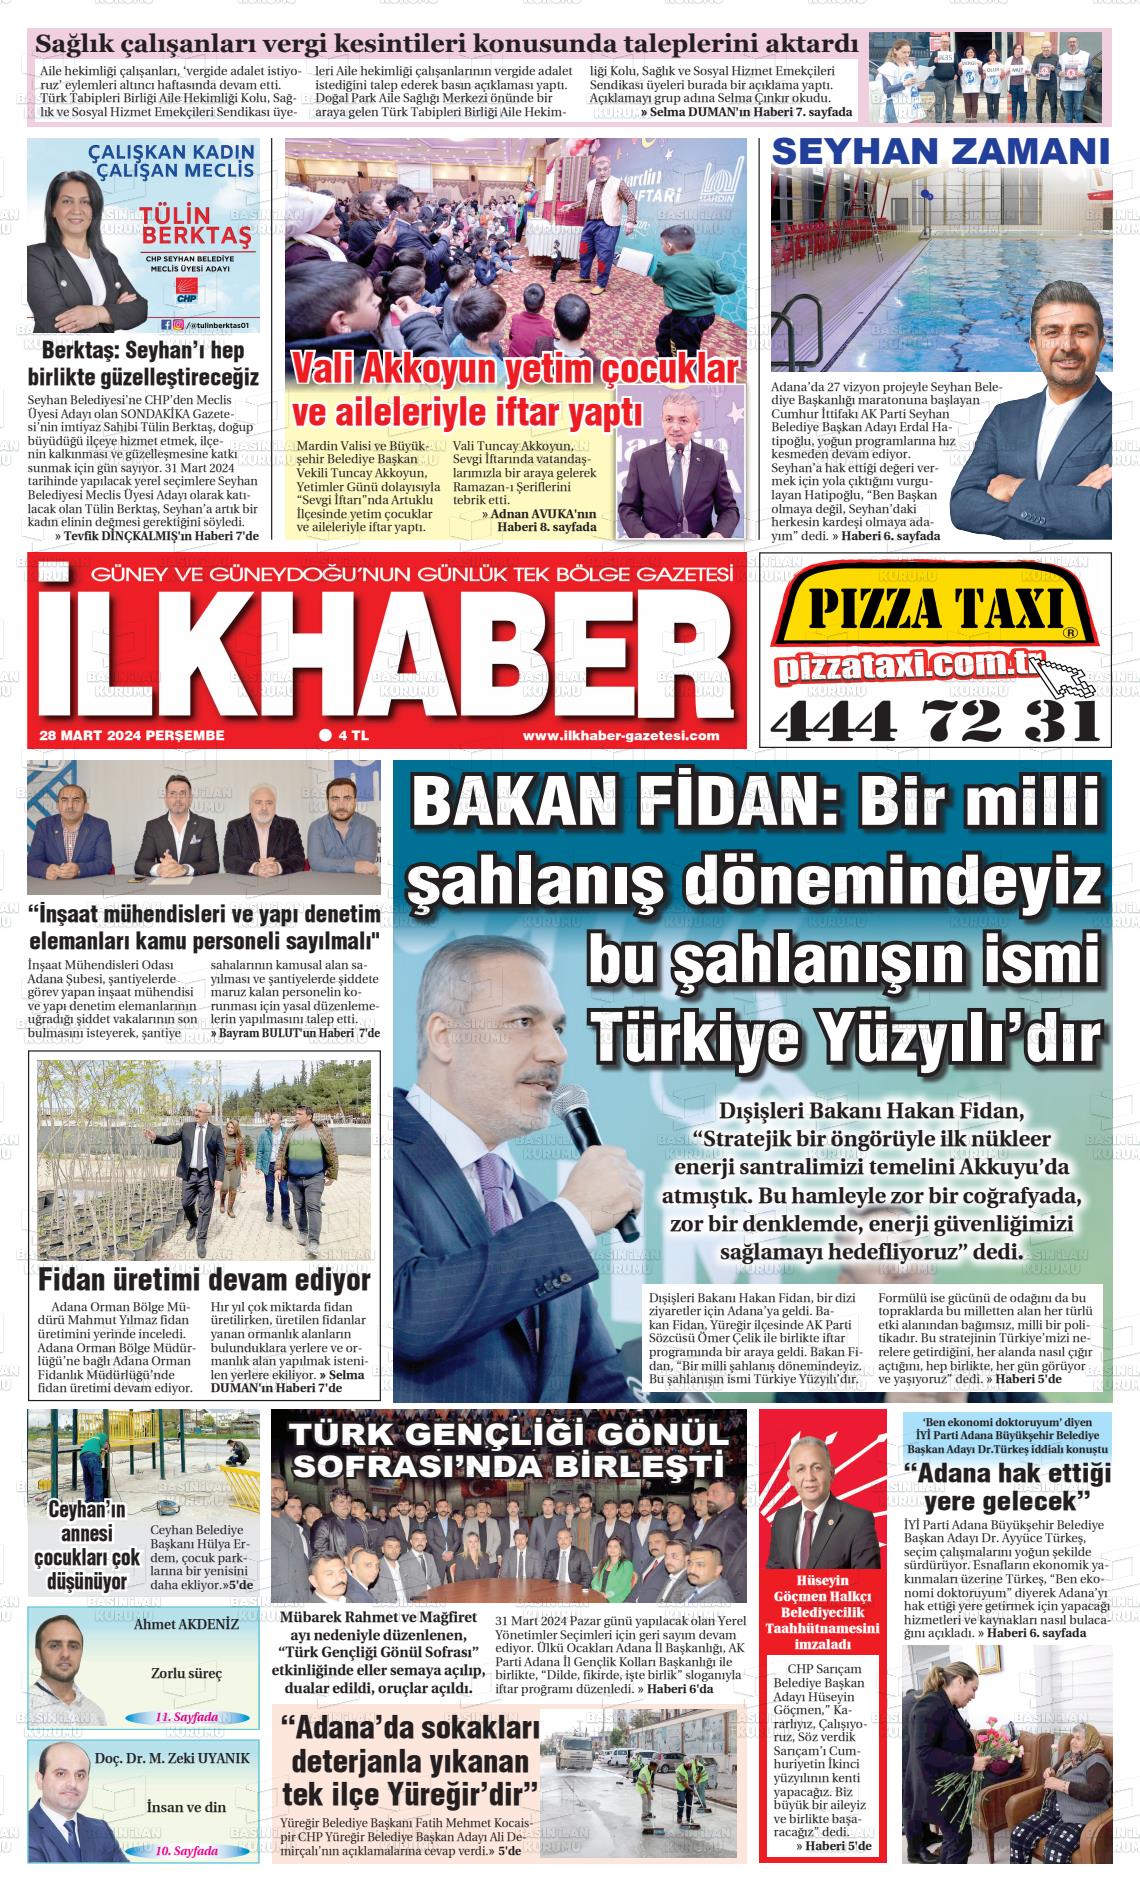 28 Mart 2024 İlk Haber Gazete Manşeti